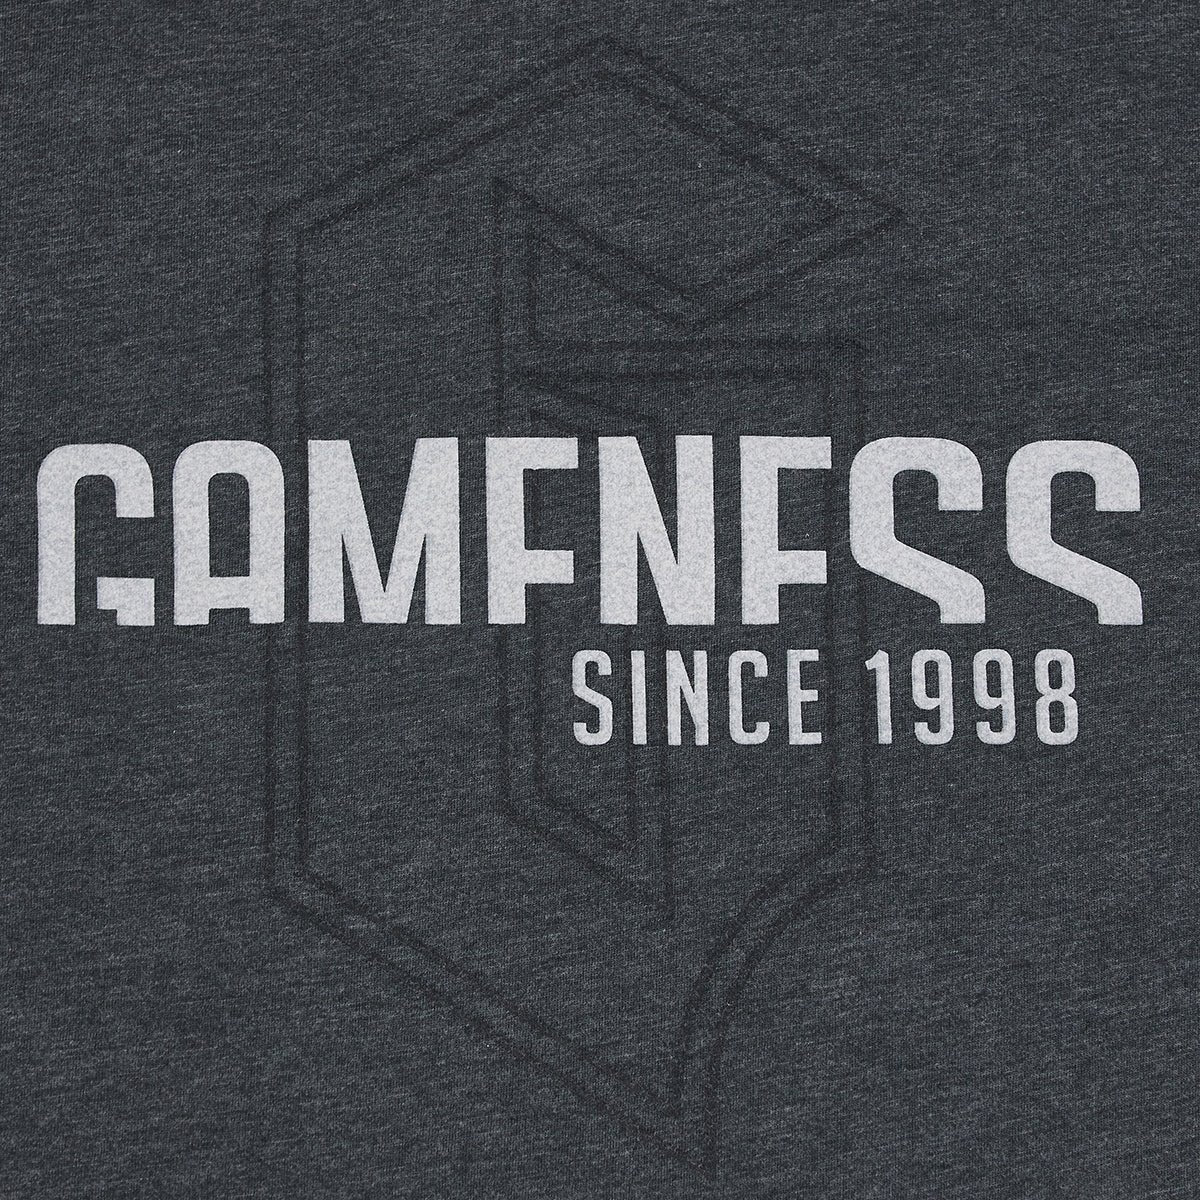 Gameness since 1998 Tee